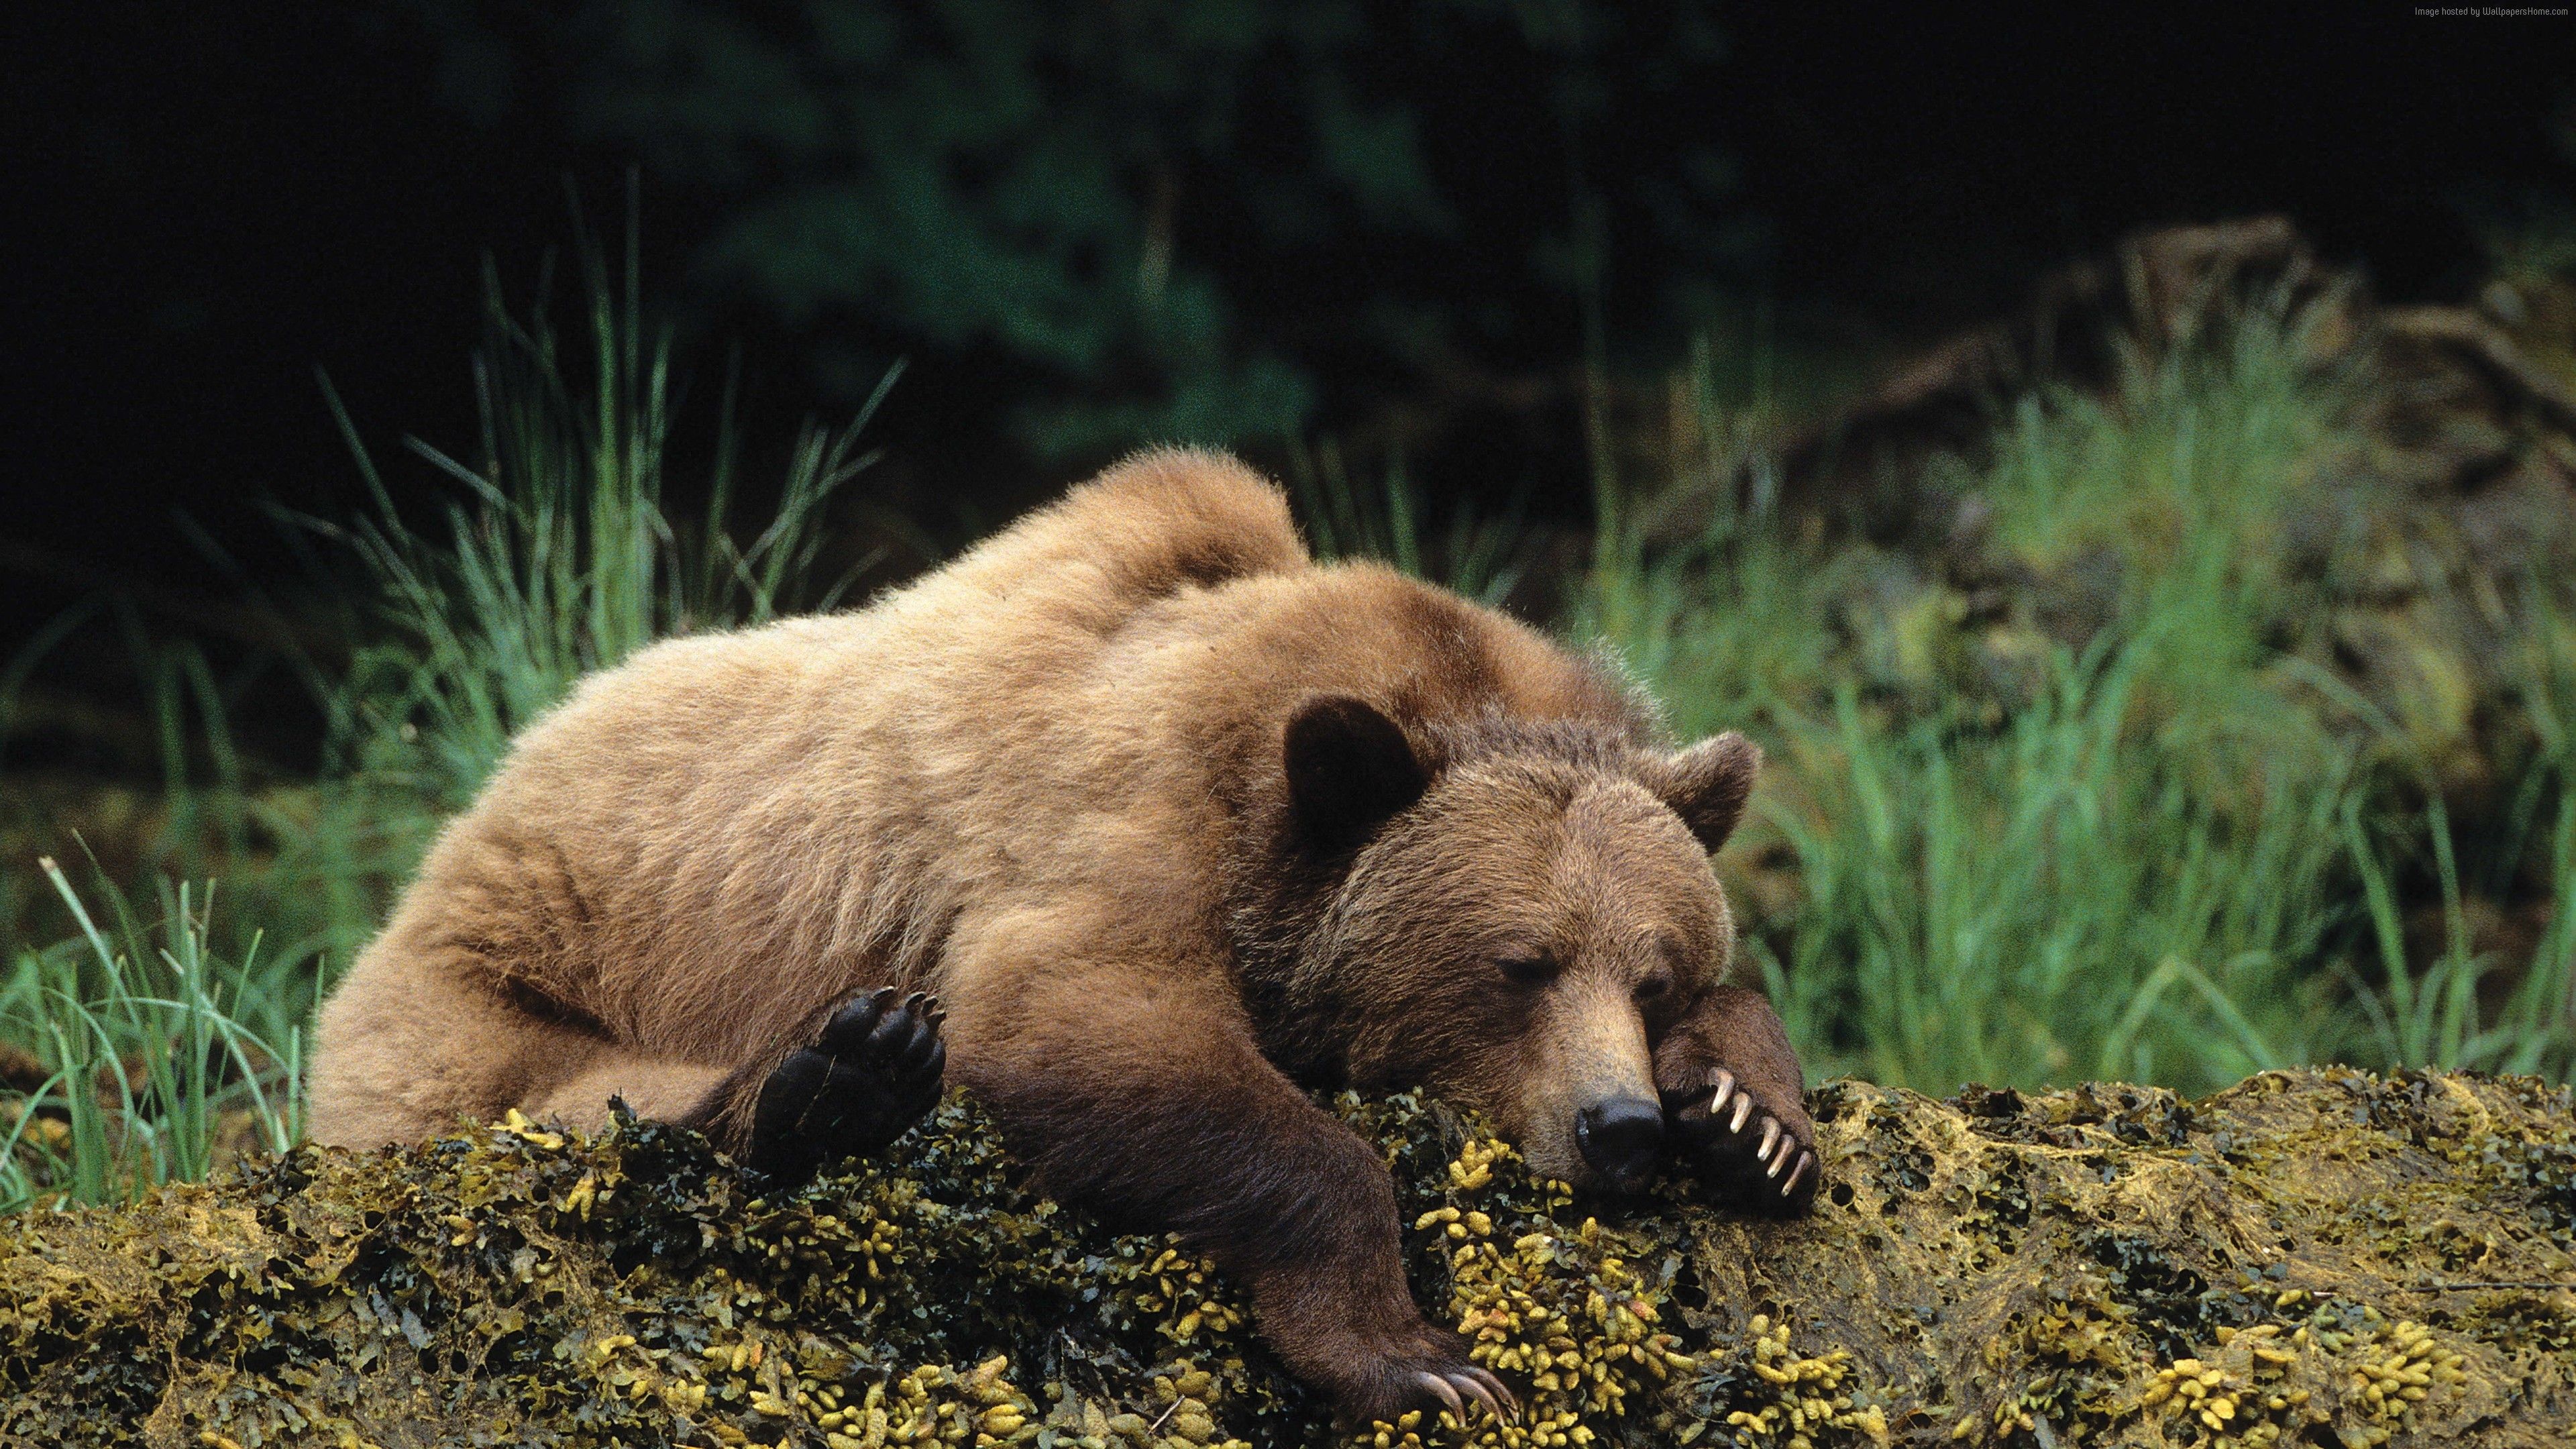 Grizzly Bear, Cute animal sleep, High resolution wallpaper, Stunning bear pictures, 3840x2160 4K Desktop